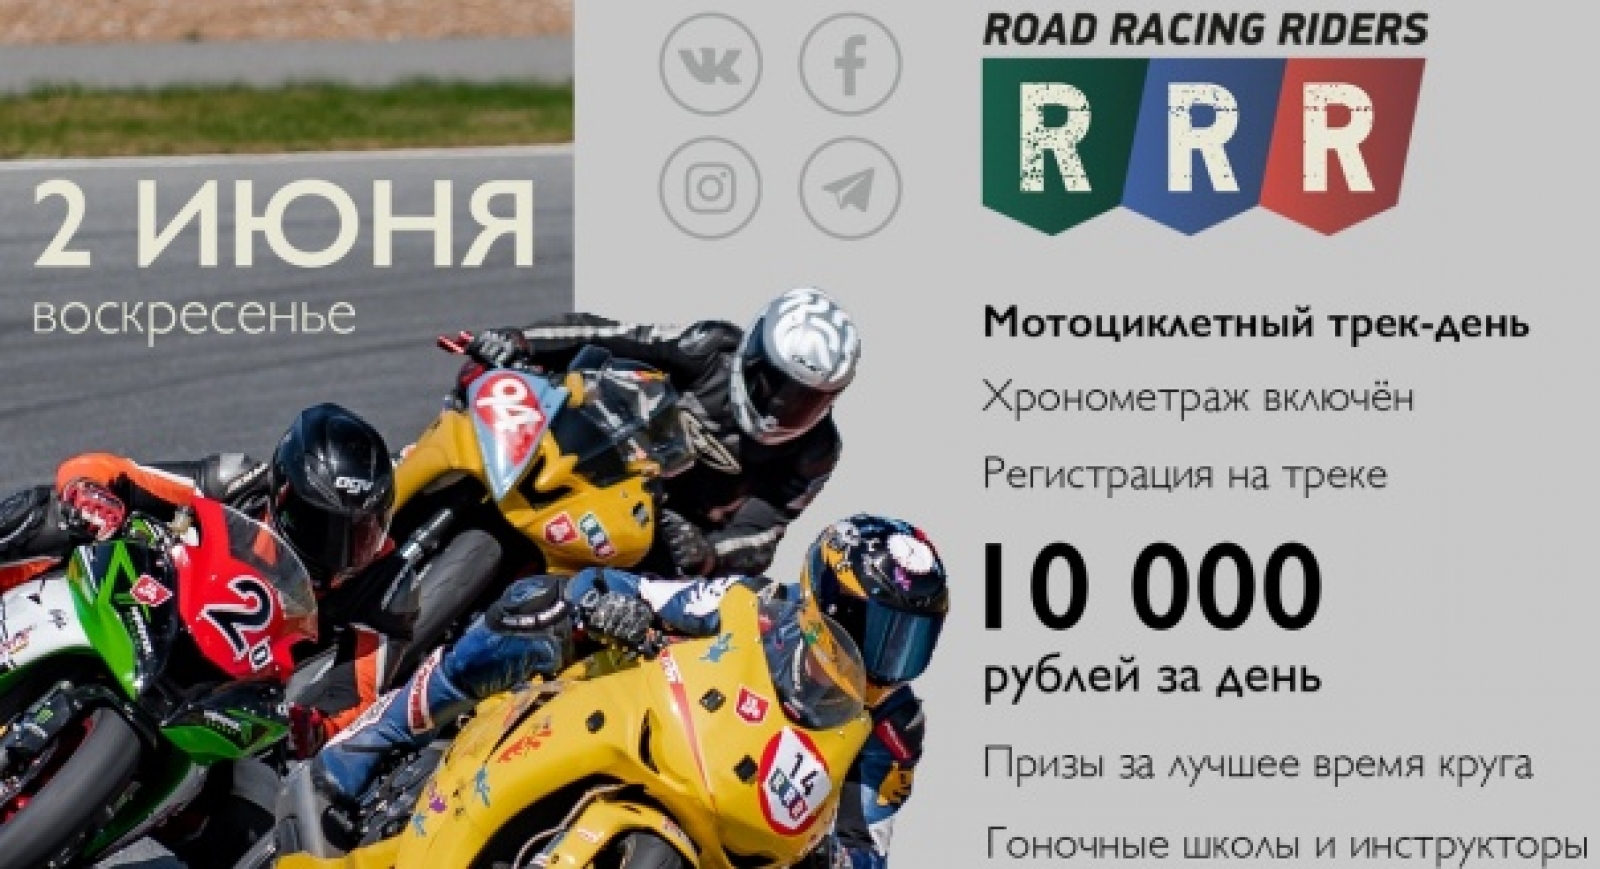 Road Racing Riders: Расписание